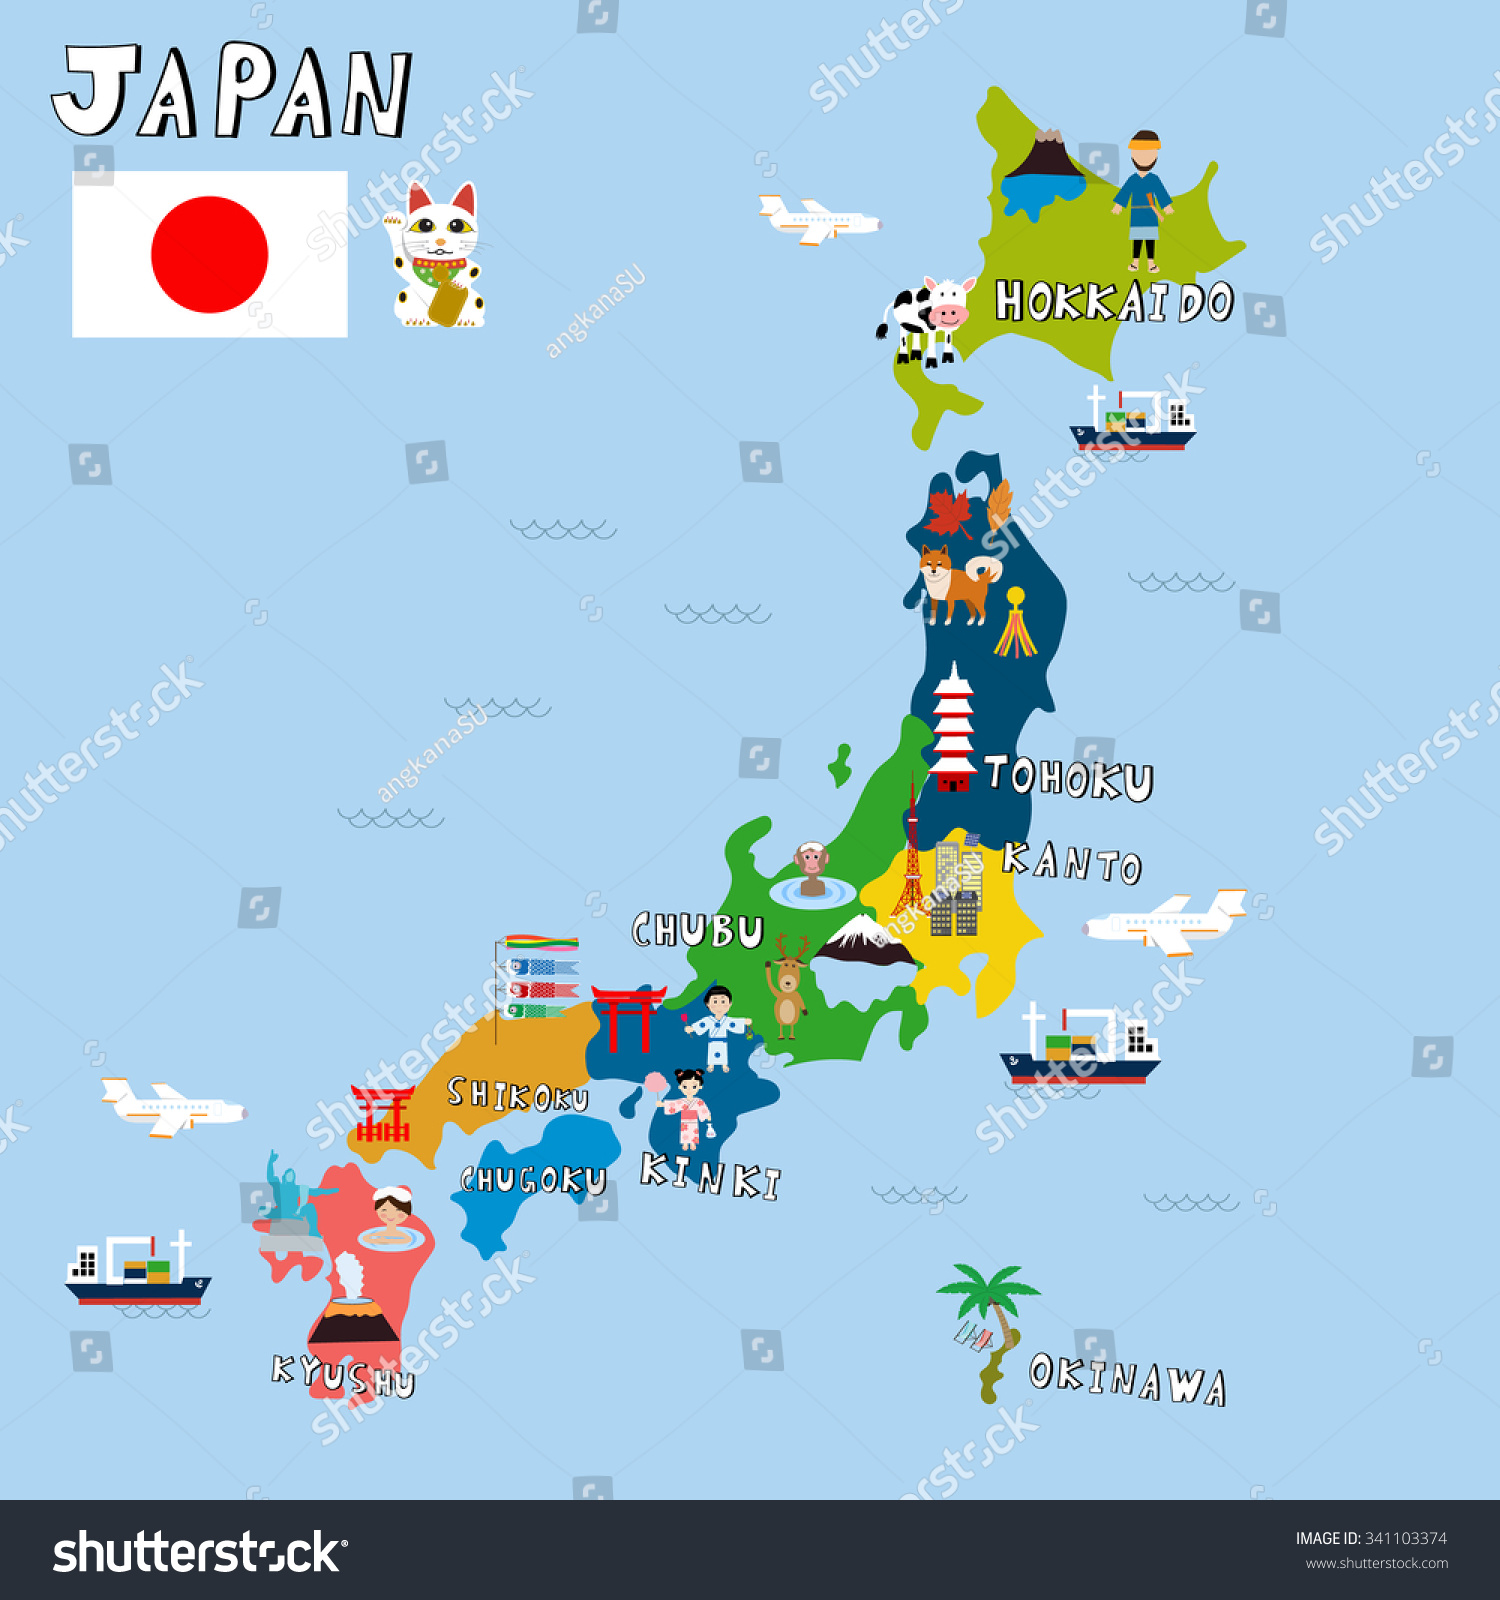 clipart japan map - photo #41